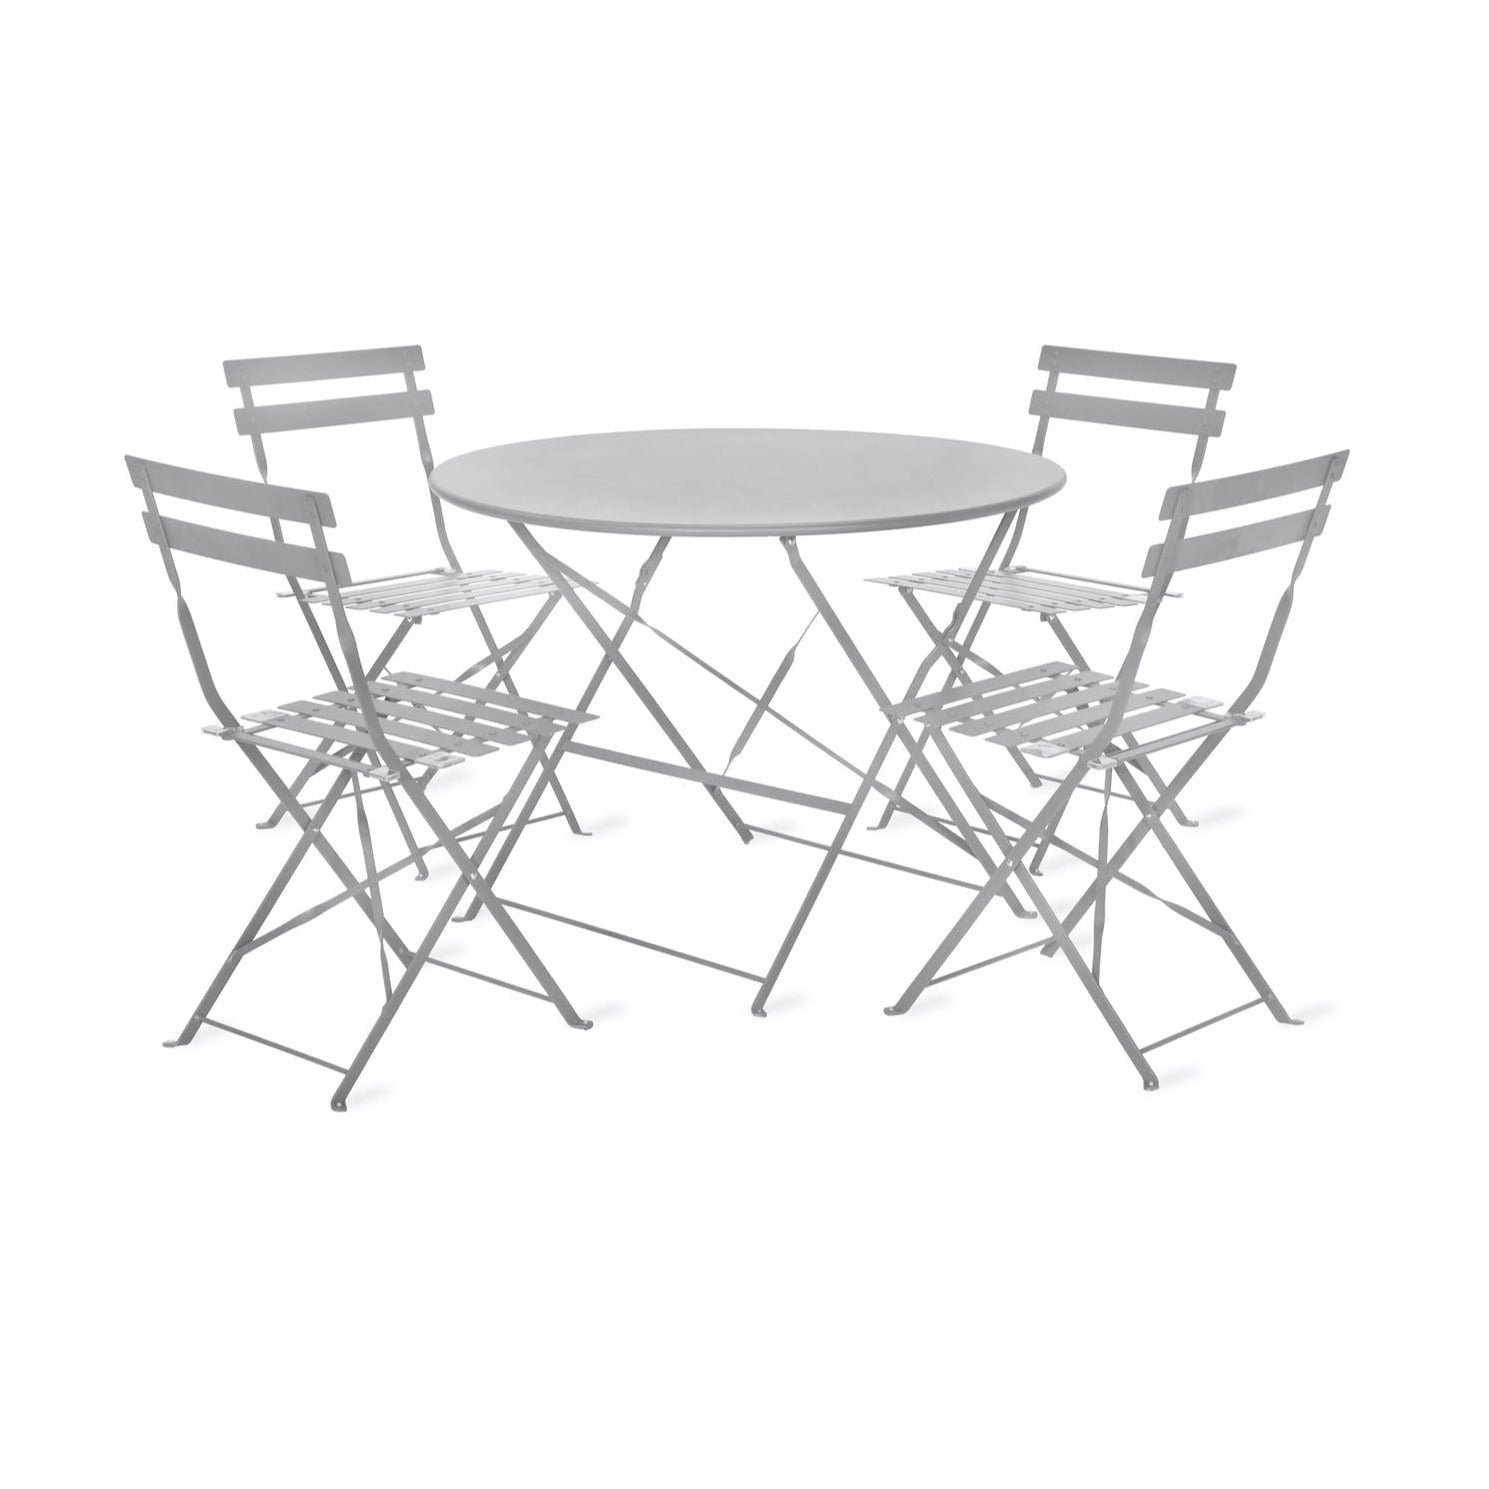 Set of 4 Bistro Chairs - Chalk White - Duck Barn Interiors